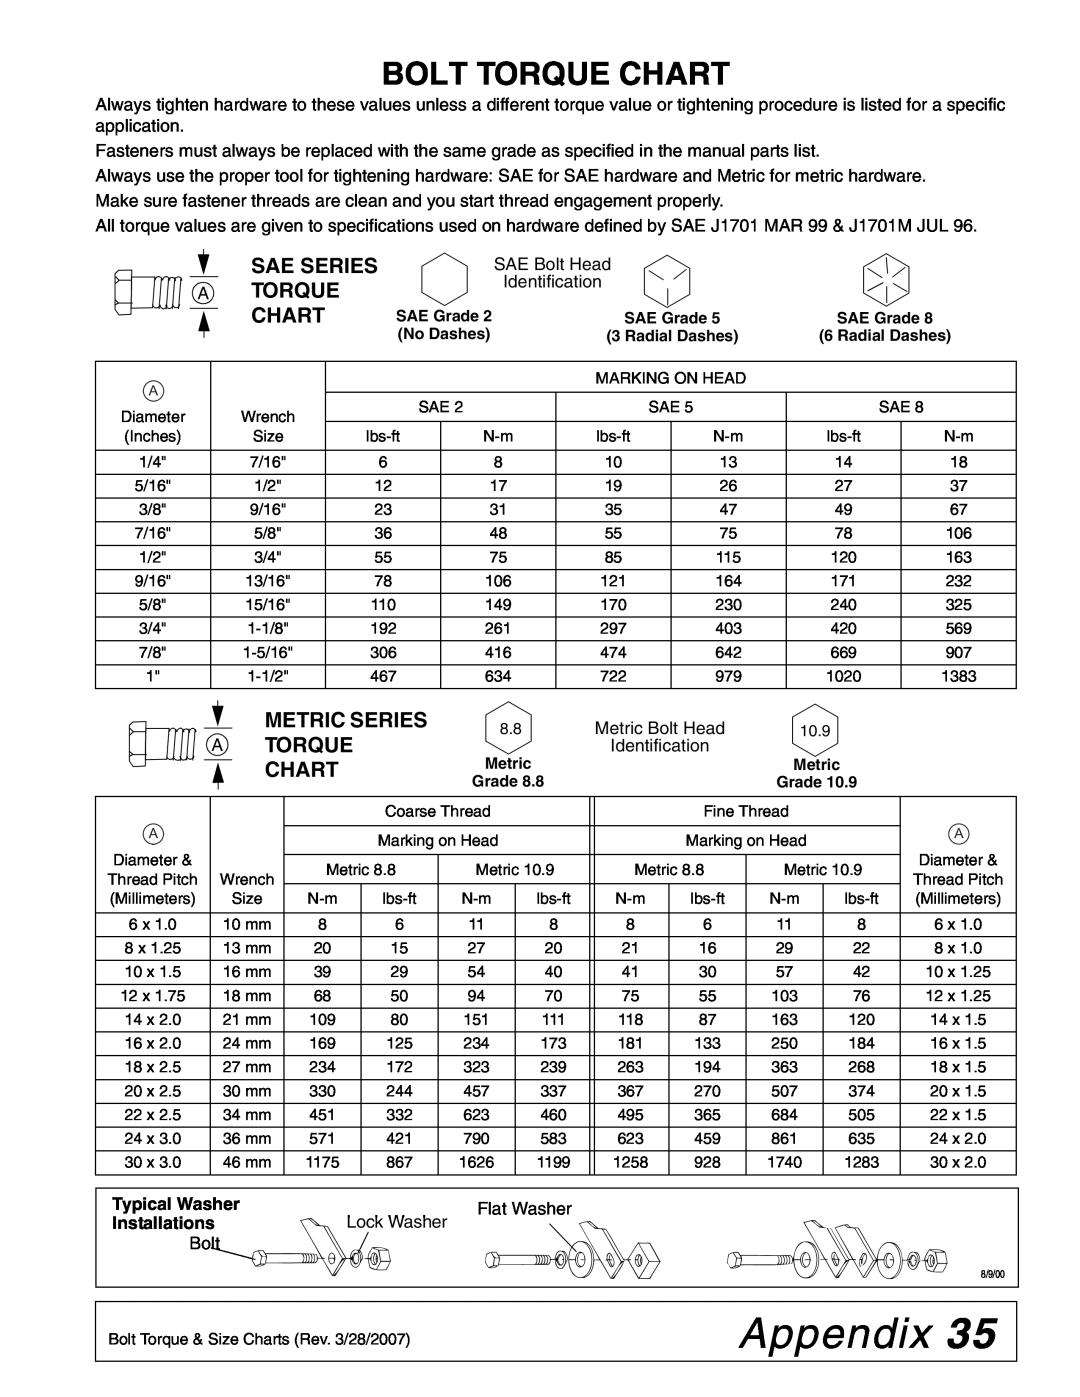 Woods Equipment TCH4500 manual Appendix, Bolt Torque Chart, Sae Series A Torque Chart, Metric Series 